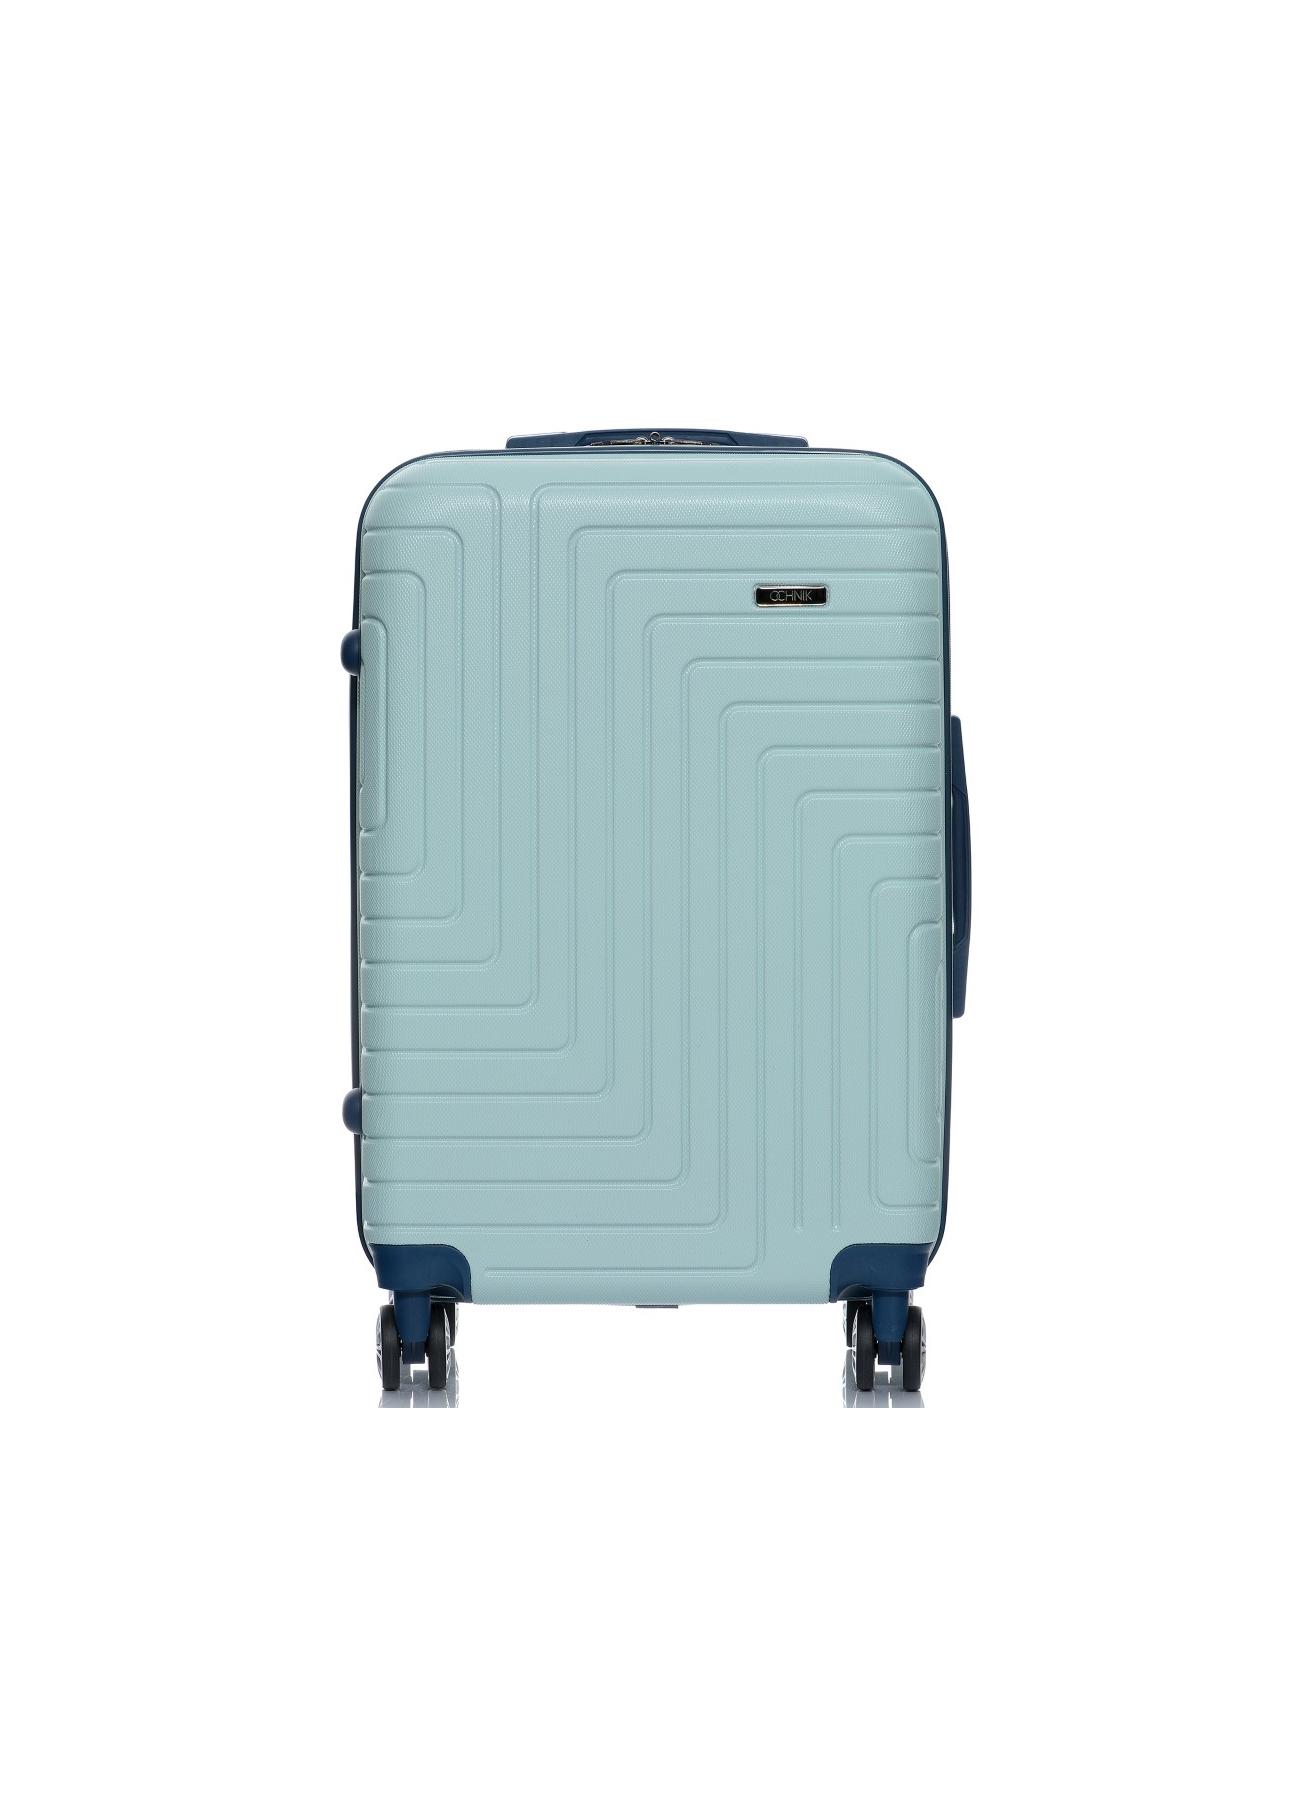 Duża walizka na kółkach WALAB-0027-61-28